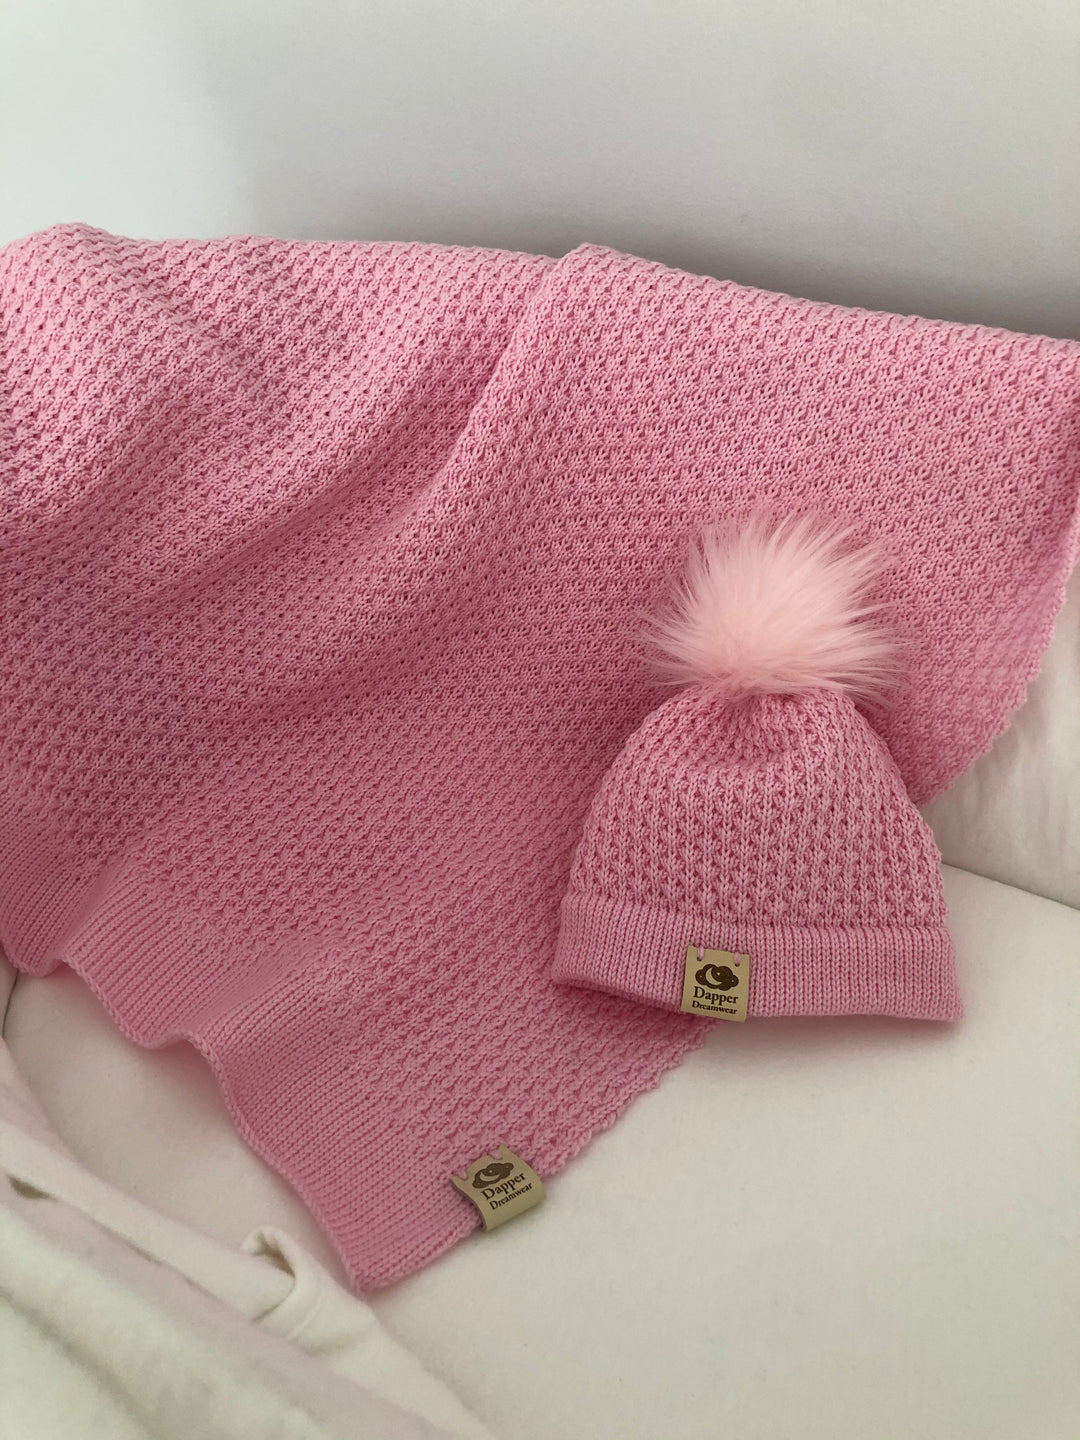 Dapper Dreamwear Merino x Baby Blanket and Hat Gift Set